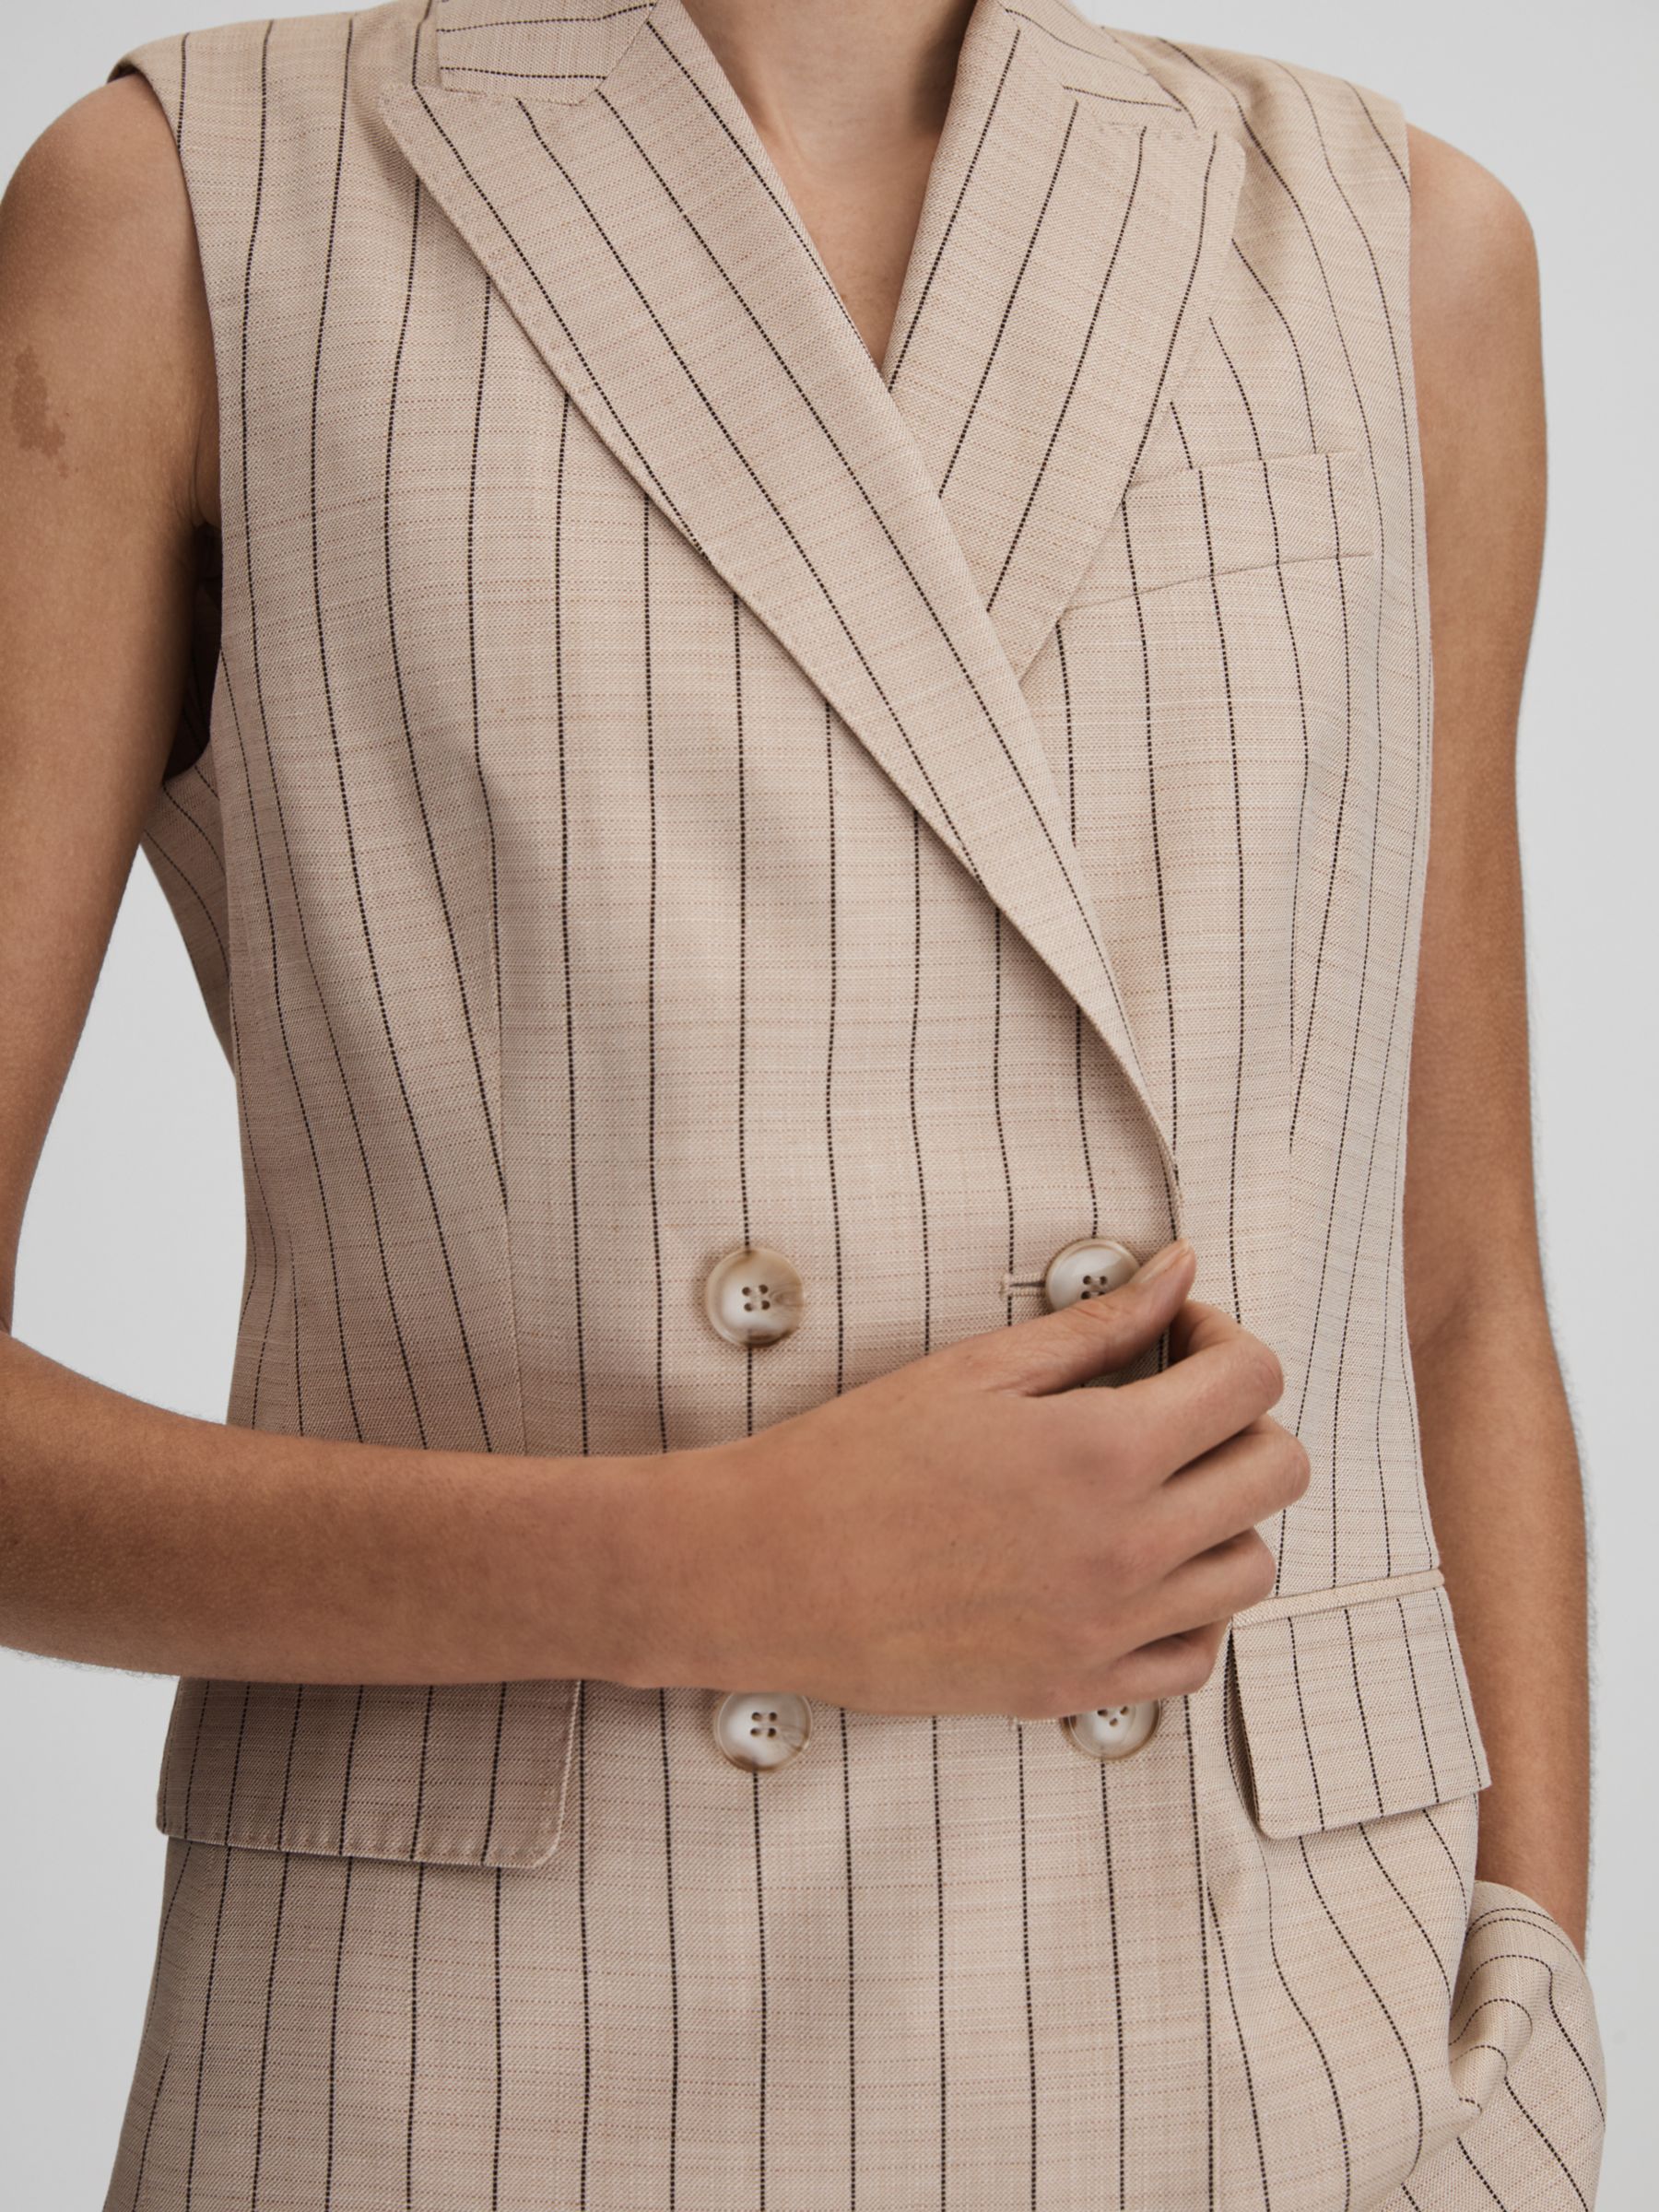 Buy Reiss Odette Wool Linen Blend Double Breasted Pinstripe Waistcoat, Neutral Online at johnlewis.com